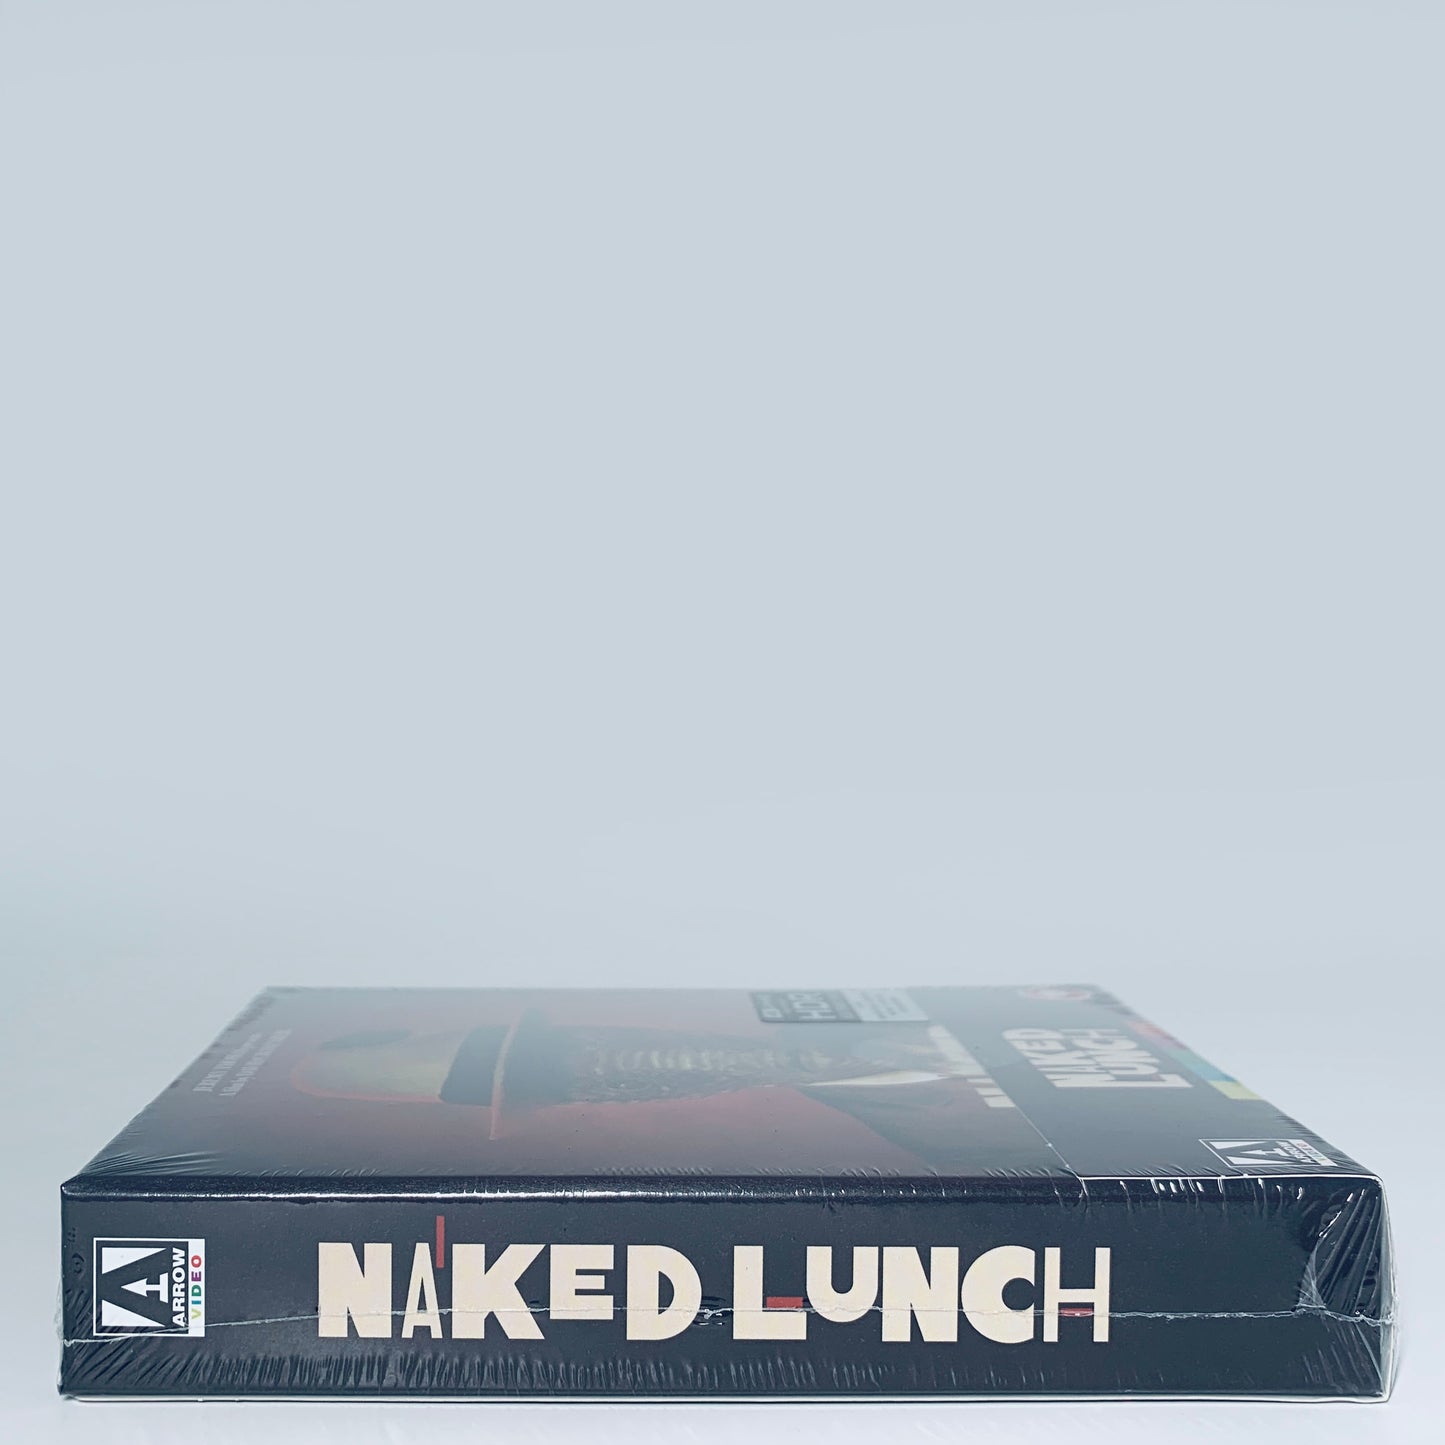 Naked Lunch Limited David Cronenberg UHD 4K Arrow Films Ultra HD Blu-ray UK